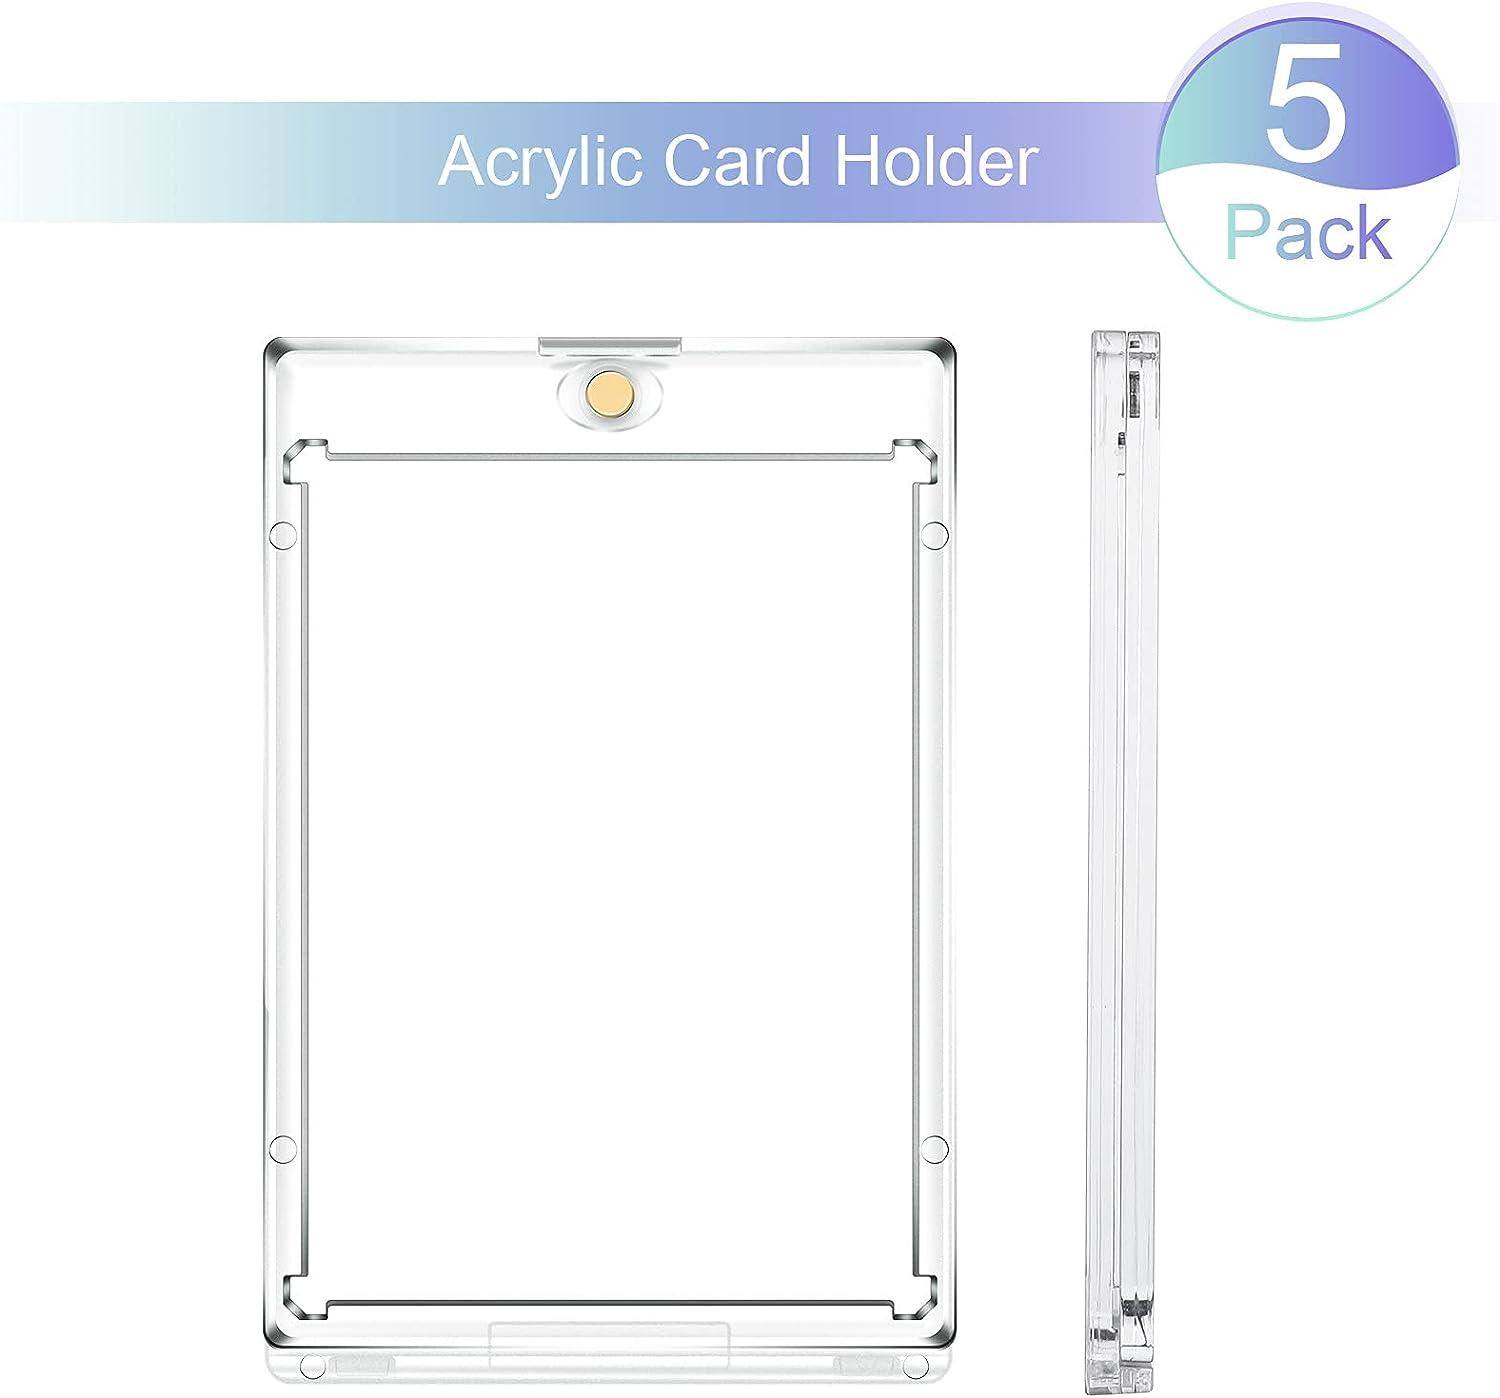 5 pcs Magnetic Card Holder New Trading Cards Protector Case Plastic Hard 35  Pt.